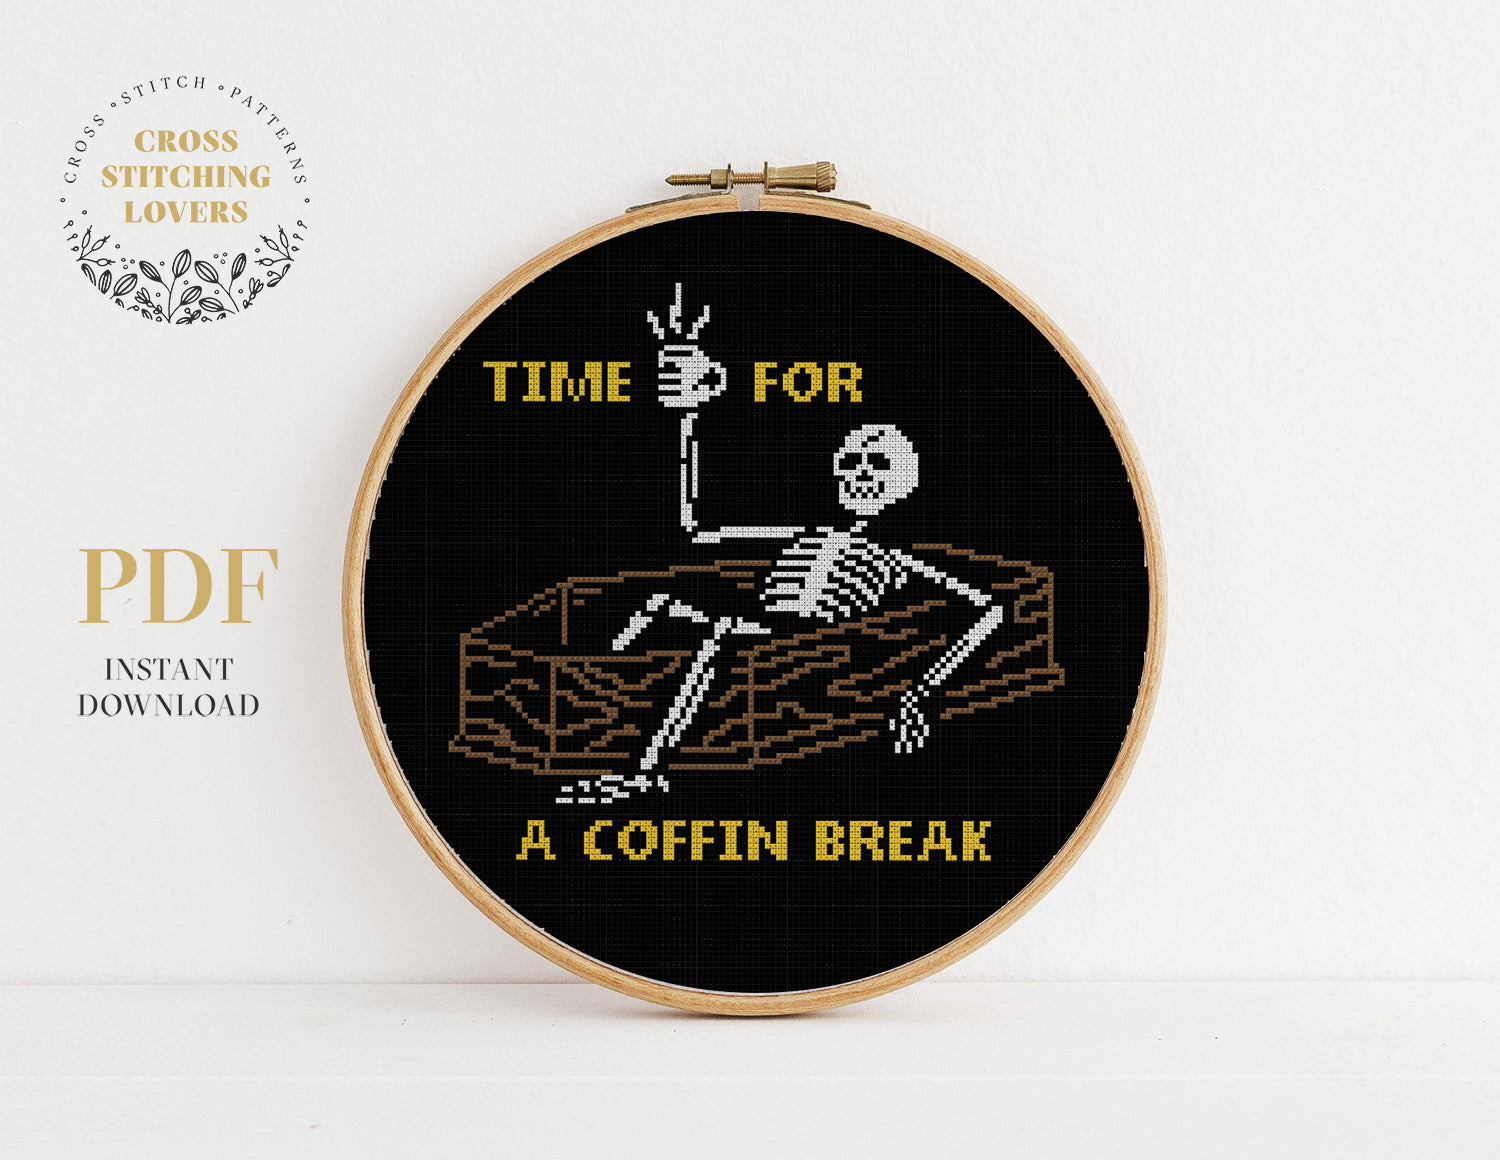 TIME FOR A COFFIN BREAK - Cross stitch pattern